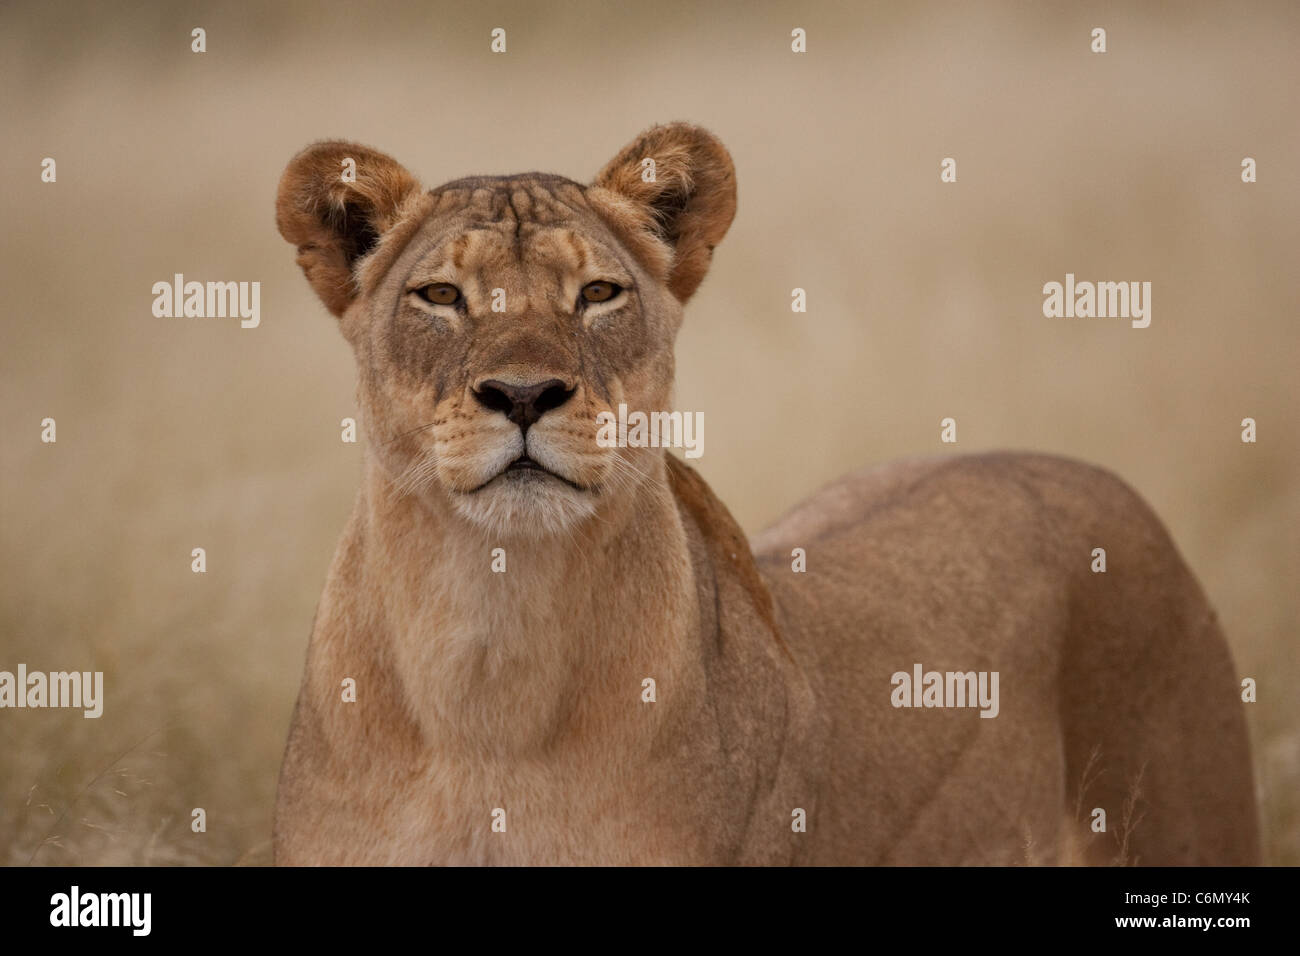 Lioness head-on looking alert Stock Photo